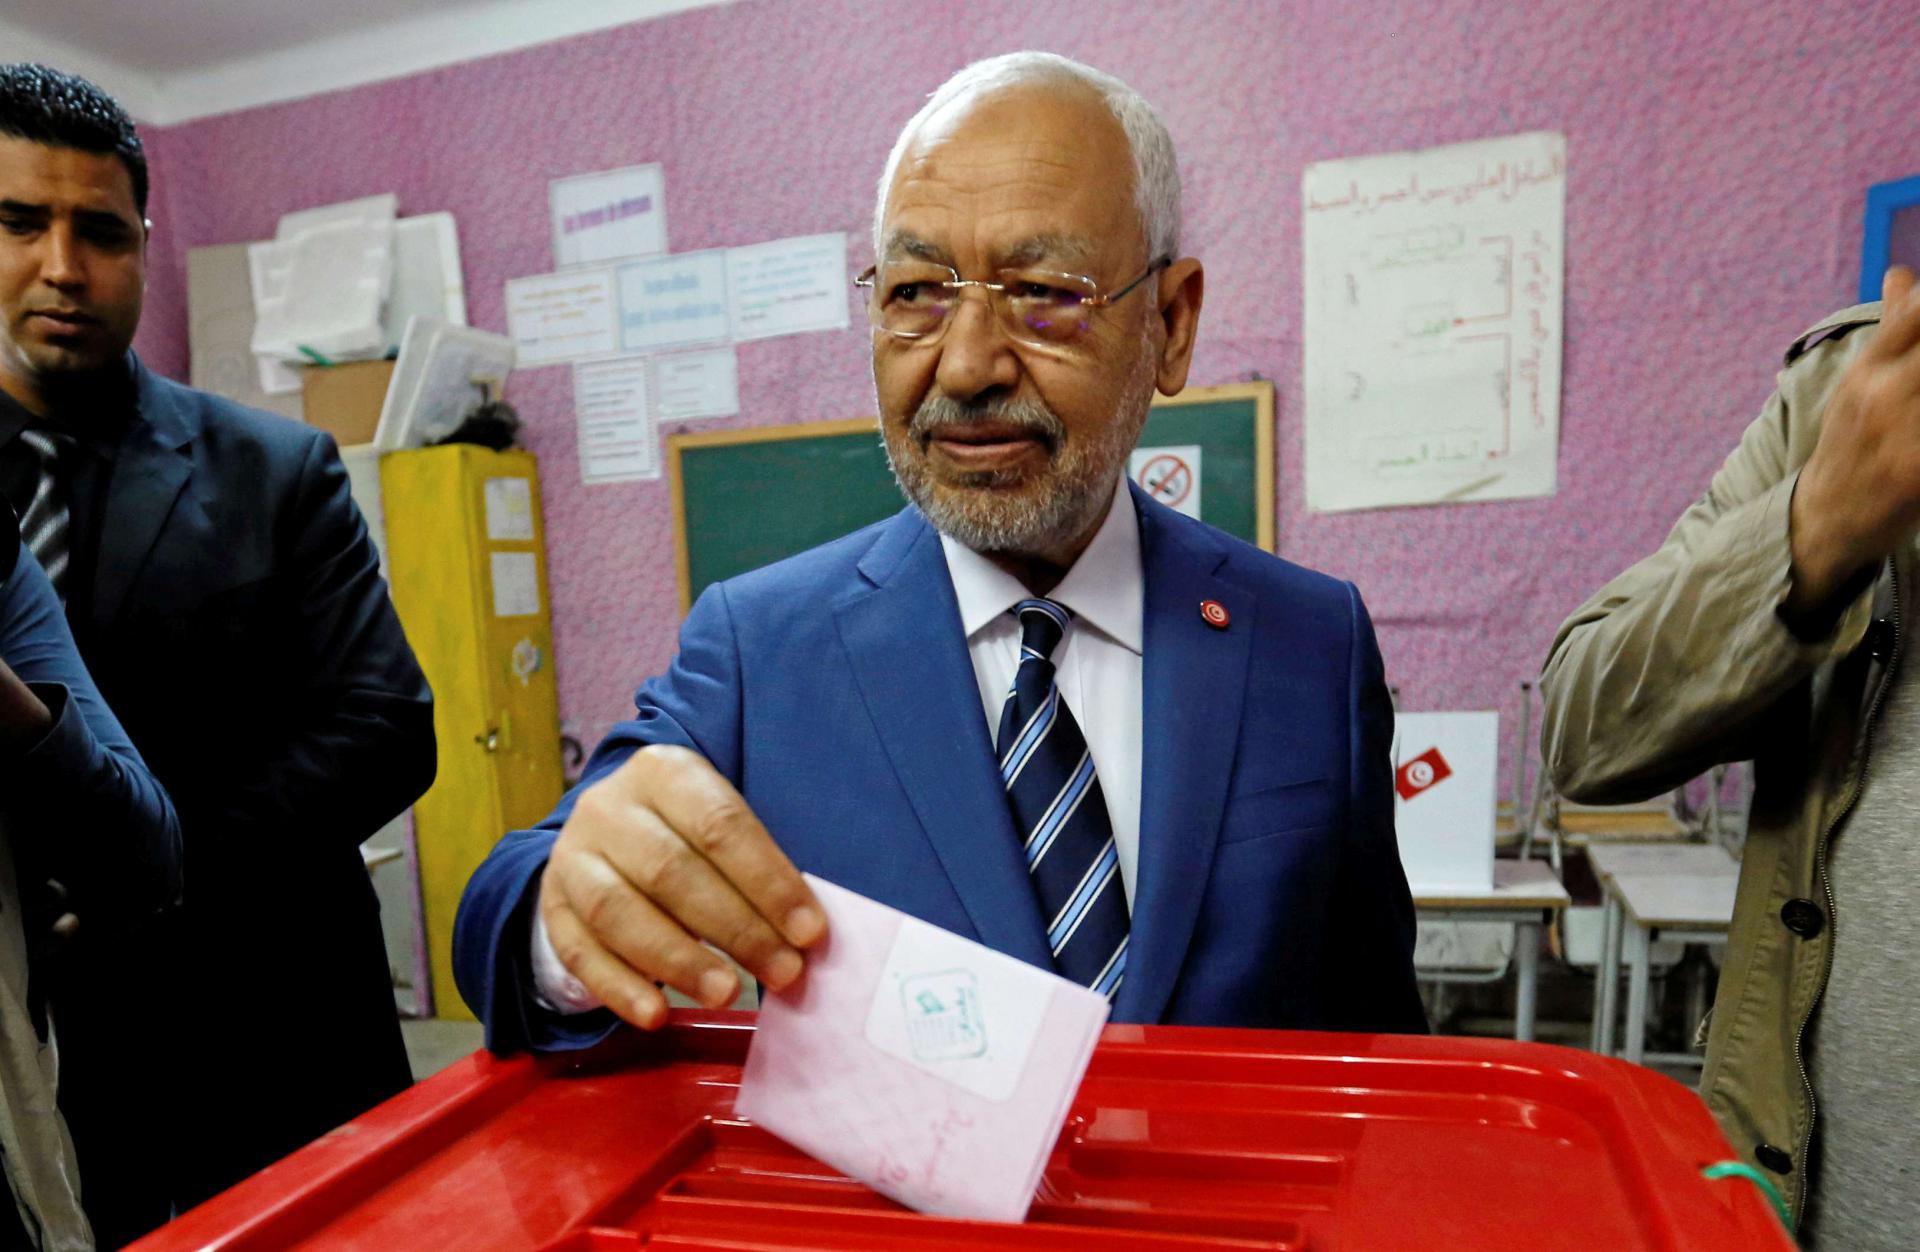 Rached Ghannouchi, head of the Ennahda party